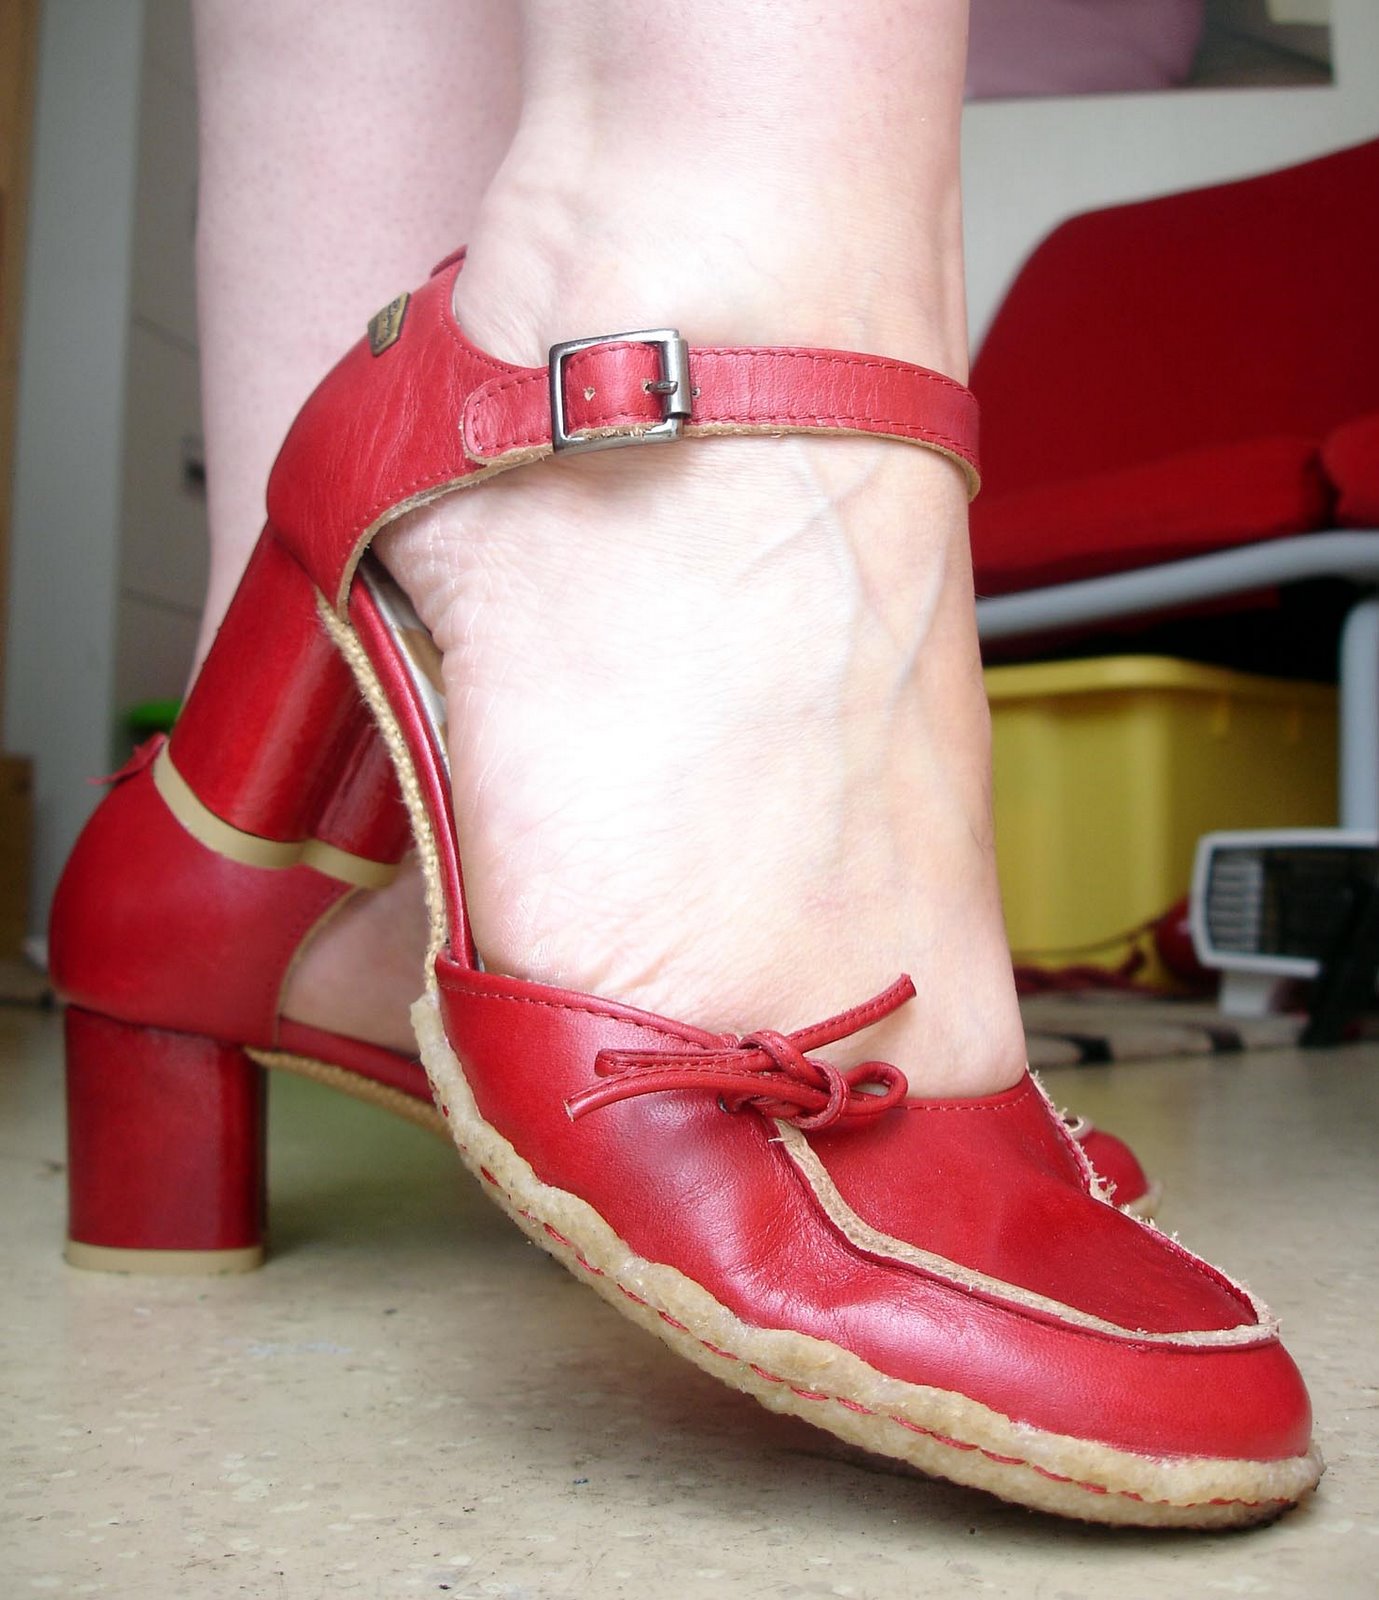 [red+shoe2.jpg]